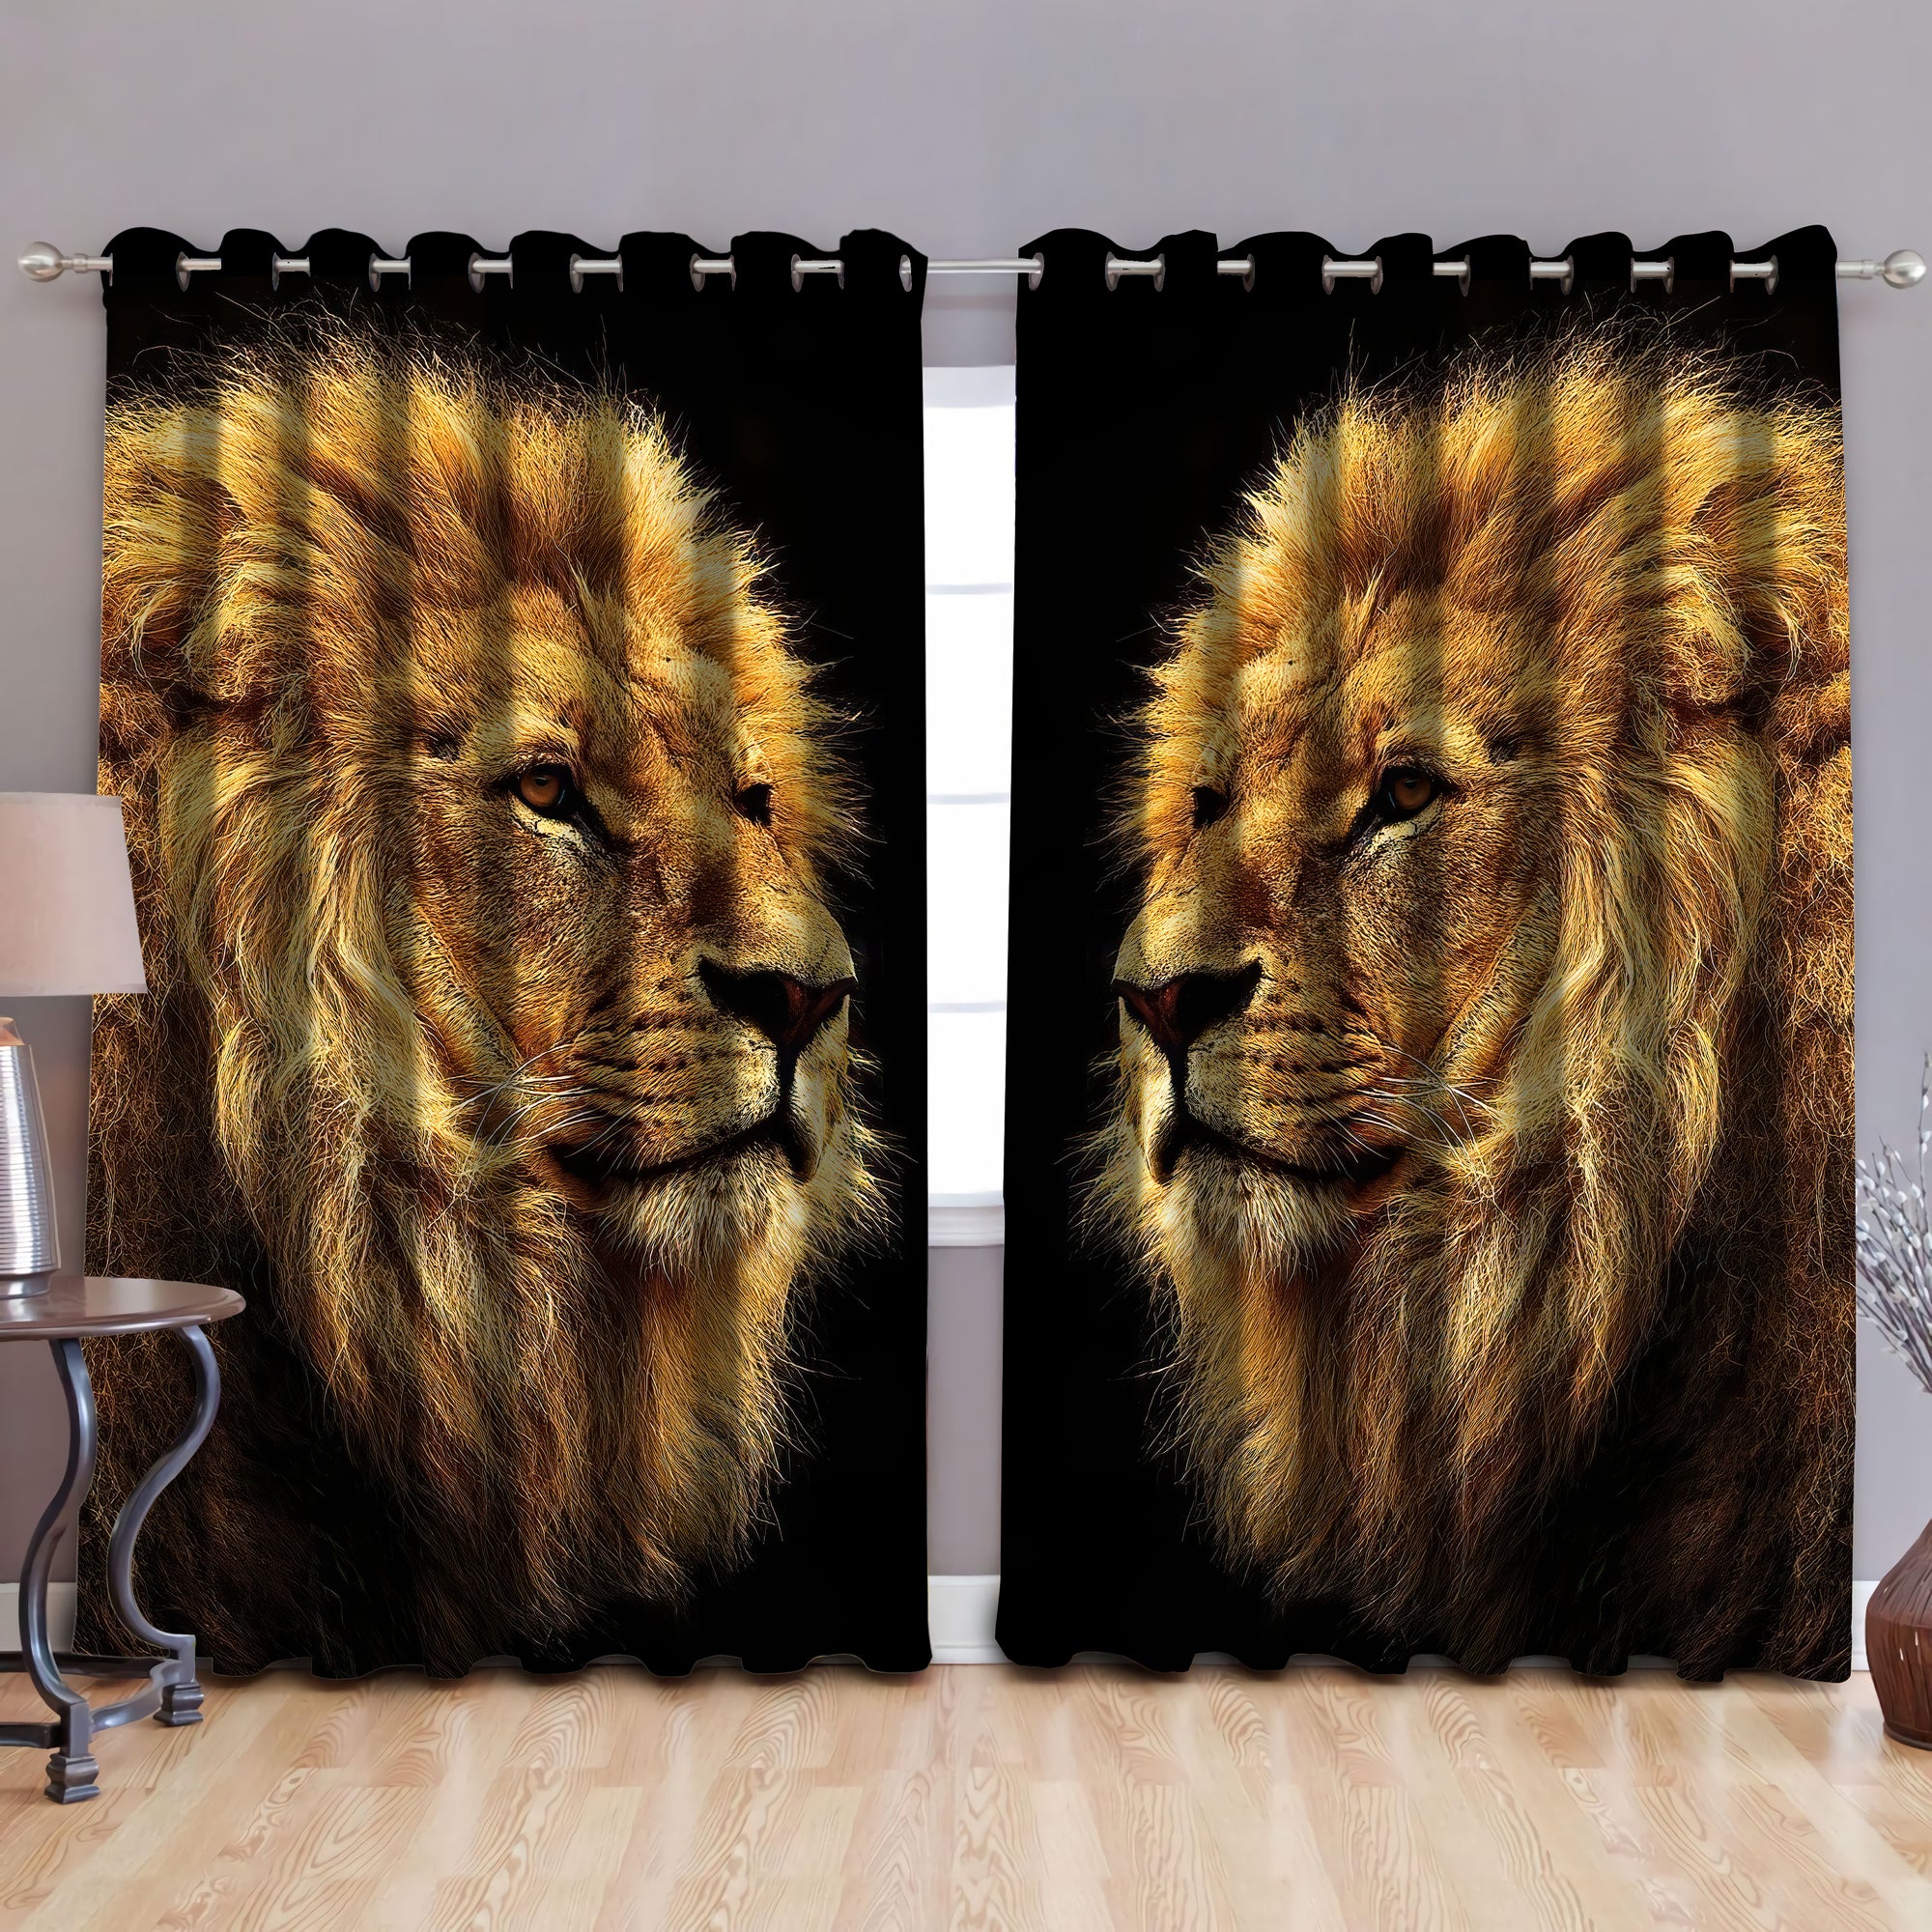 The Best Lion Window Curtains